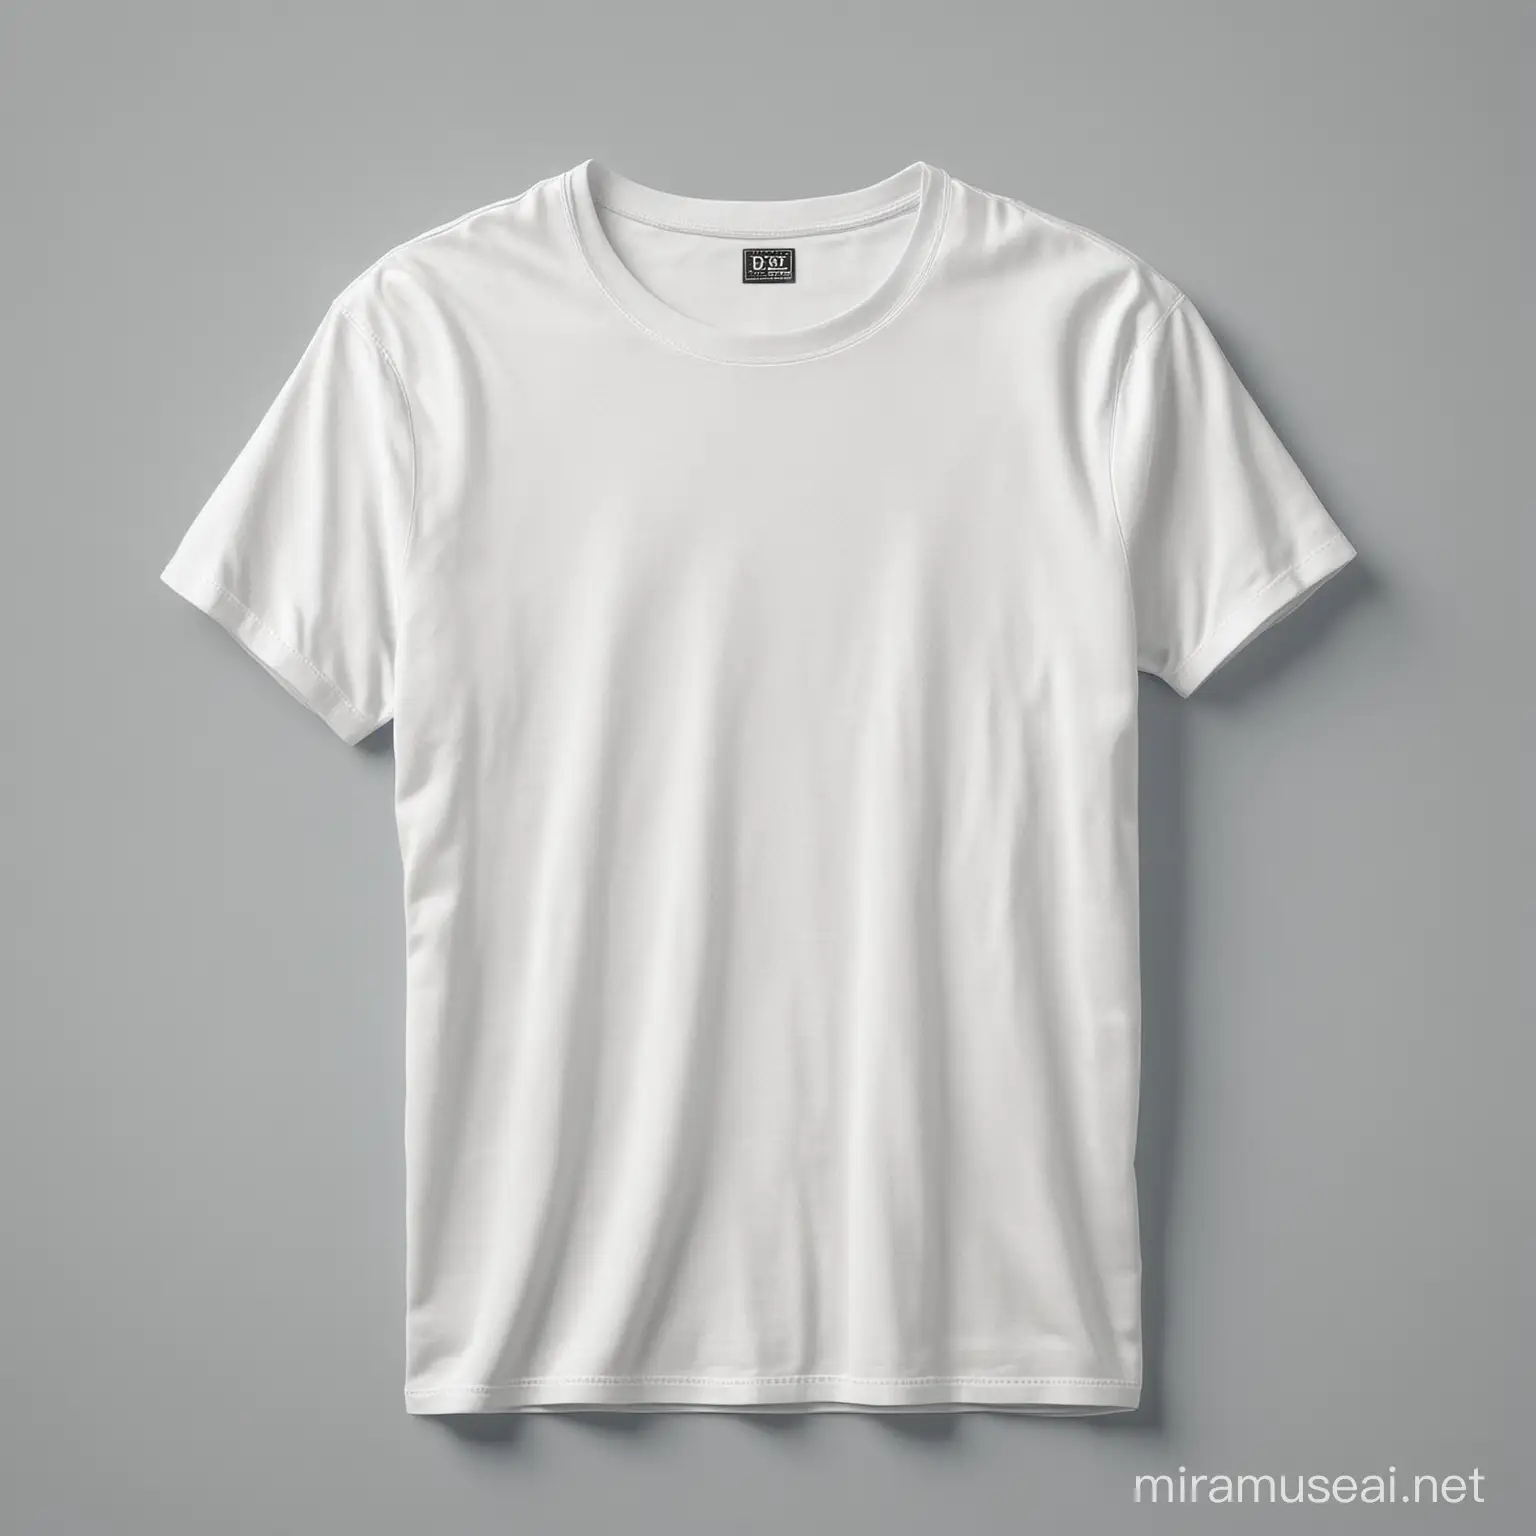 create a mockup of white tshirt